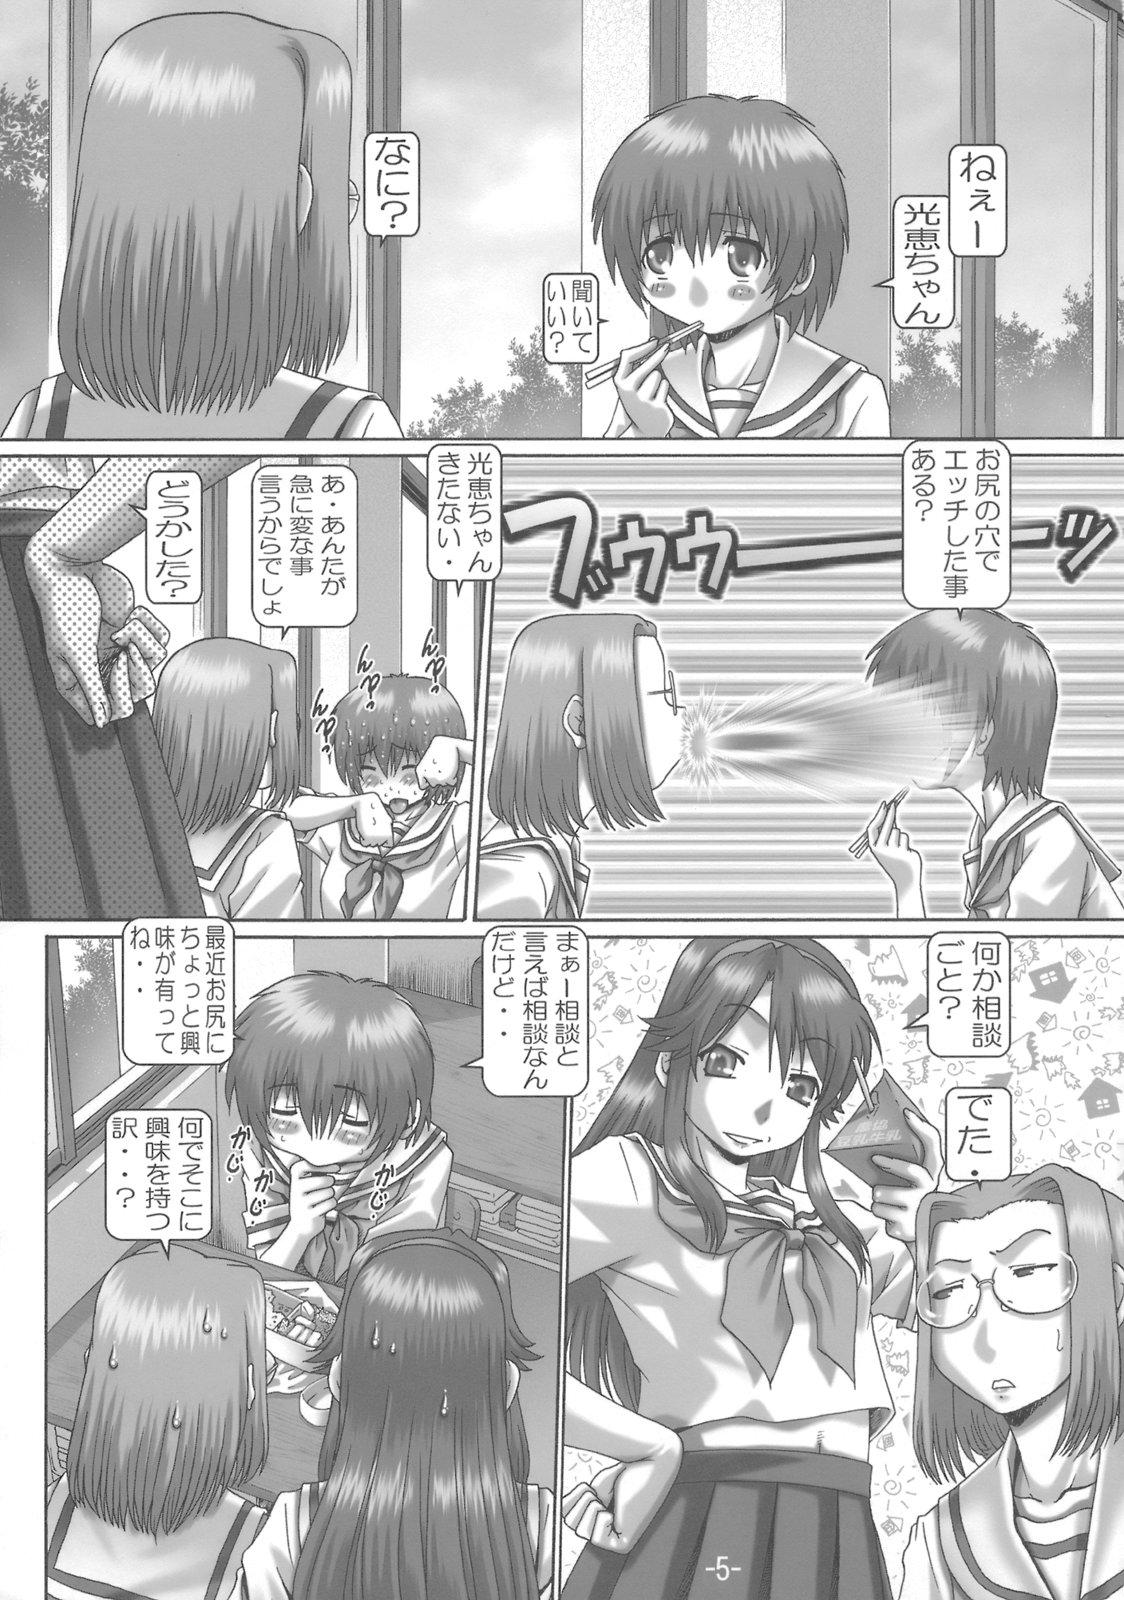 Sislovesme EMPIRE HARD CORE 6 - Fate stay night The melancholy of haruhi suzumiya Gundam seed destiny Gundam seed Kamichu Novia - Page 4